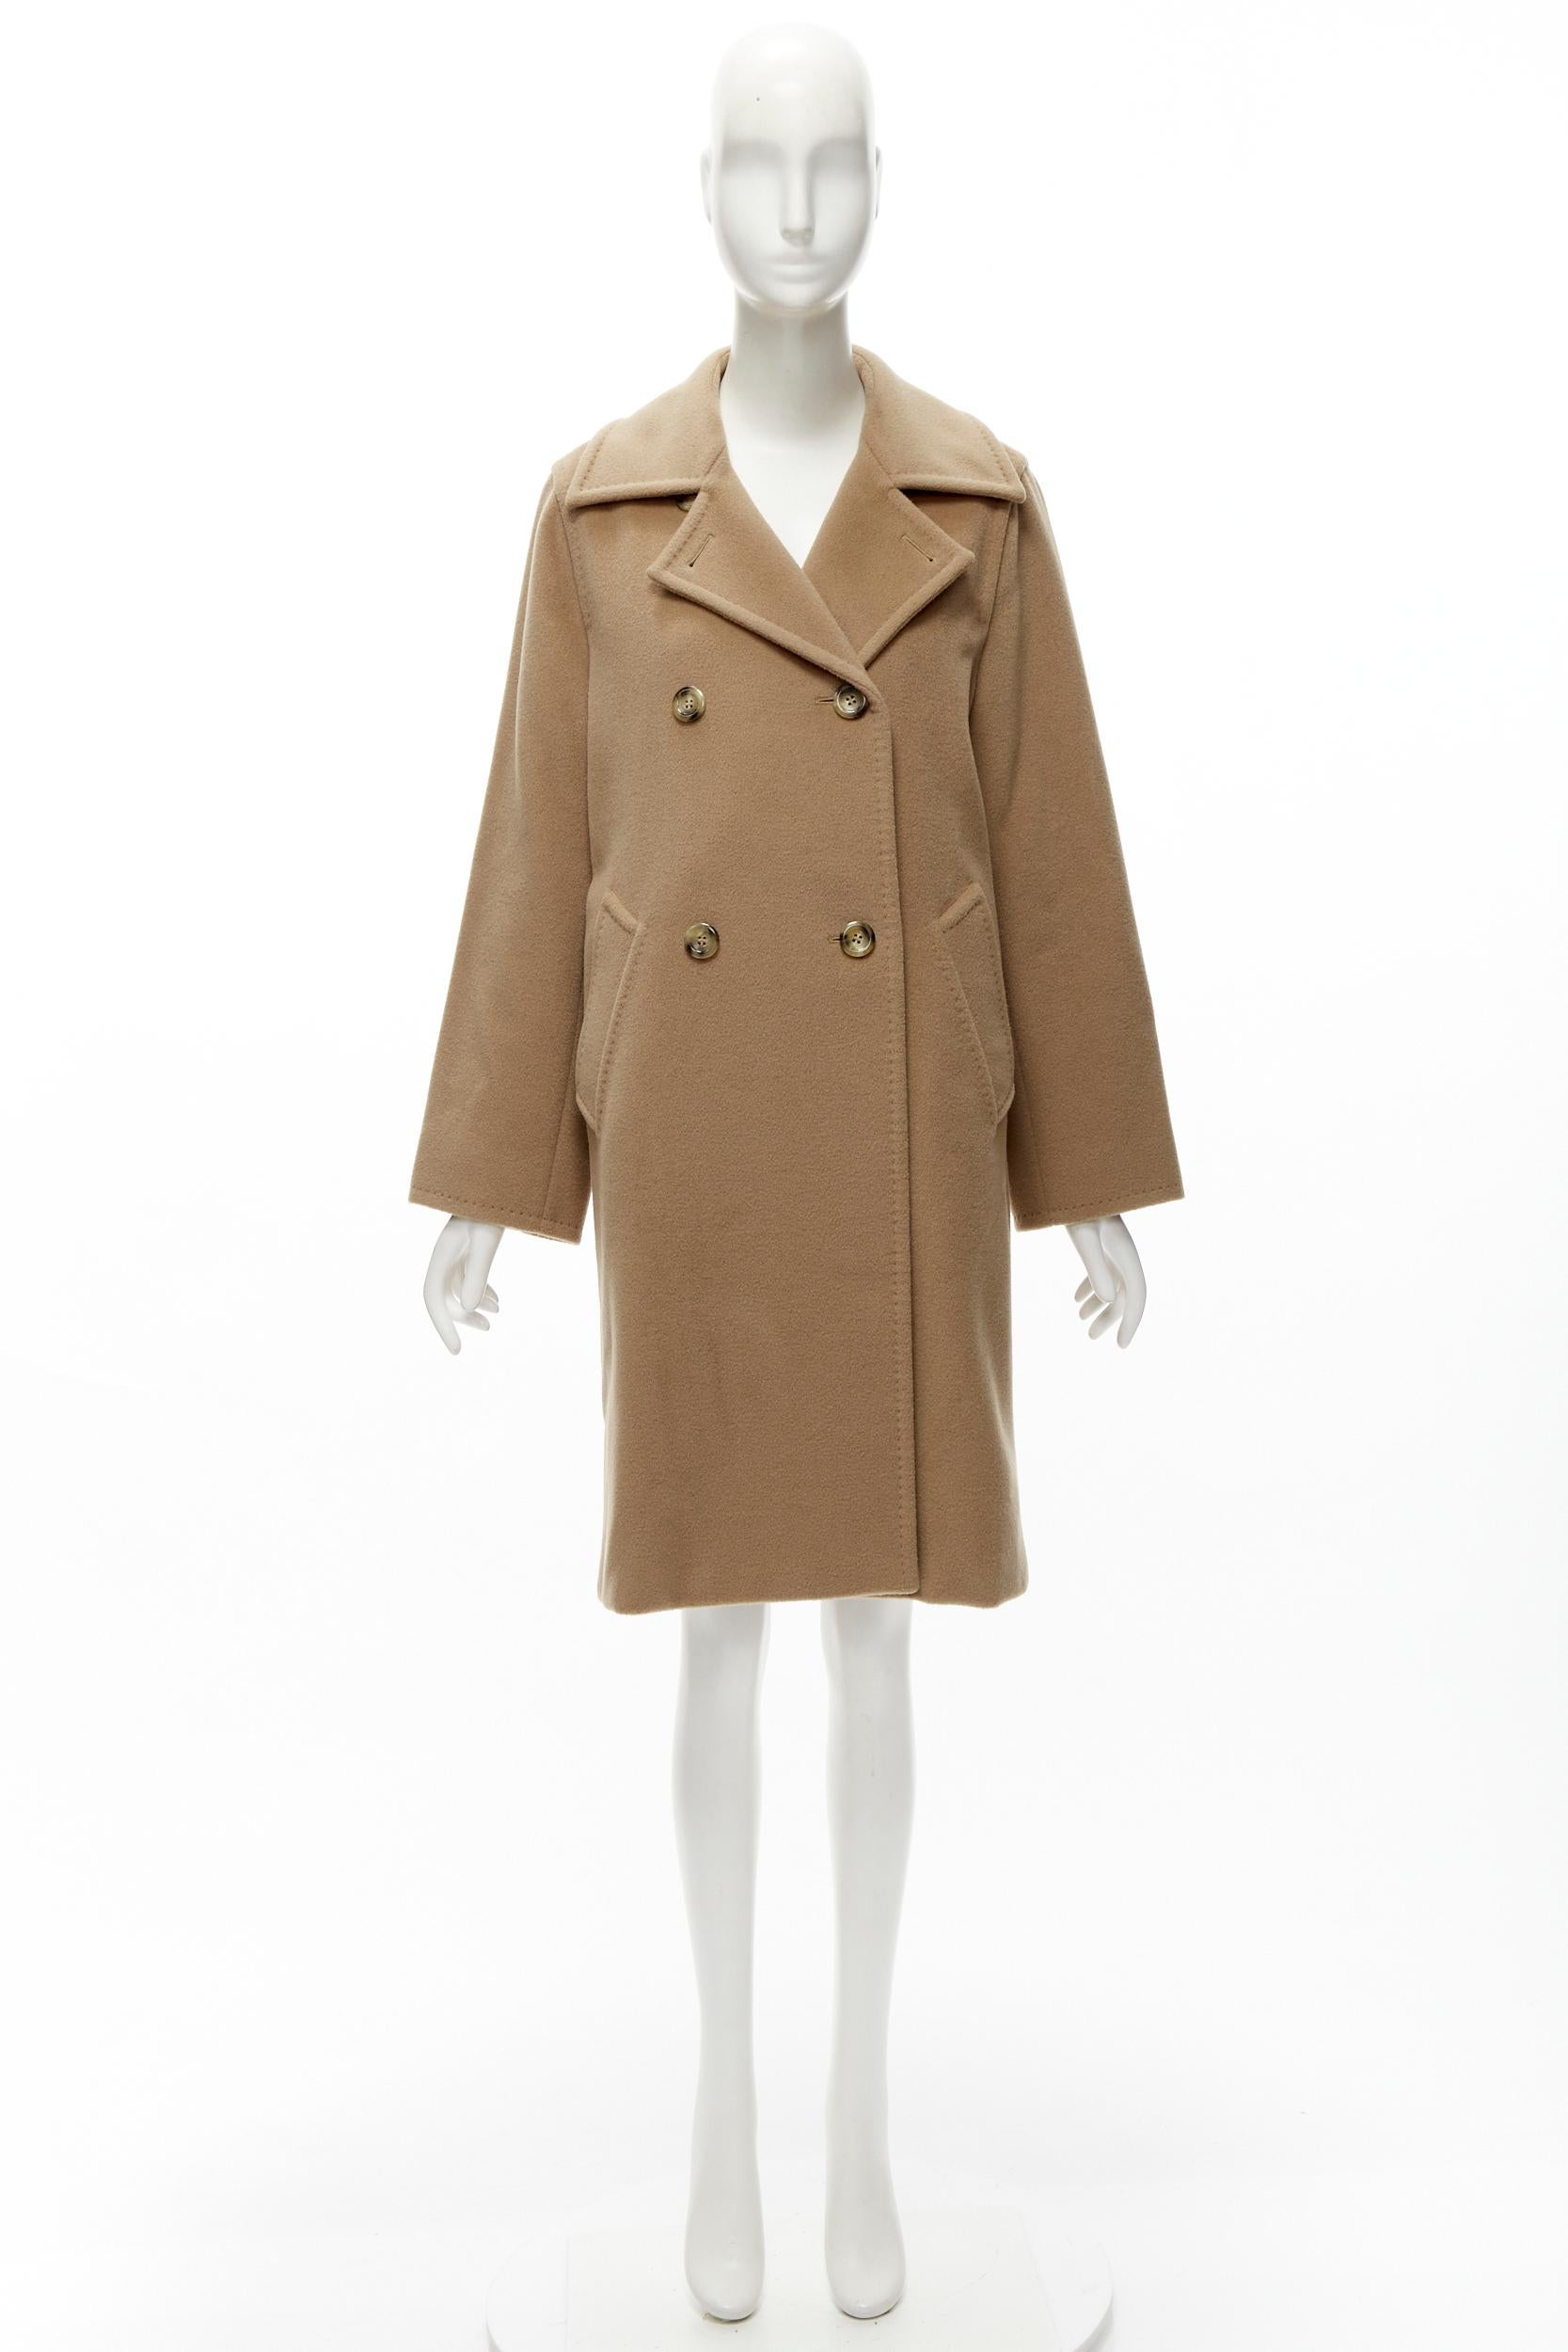 MAX MARA wool camel brown shell button longline overcoat jacket FR36 6